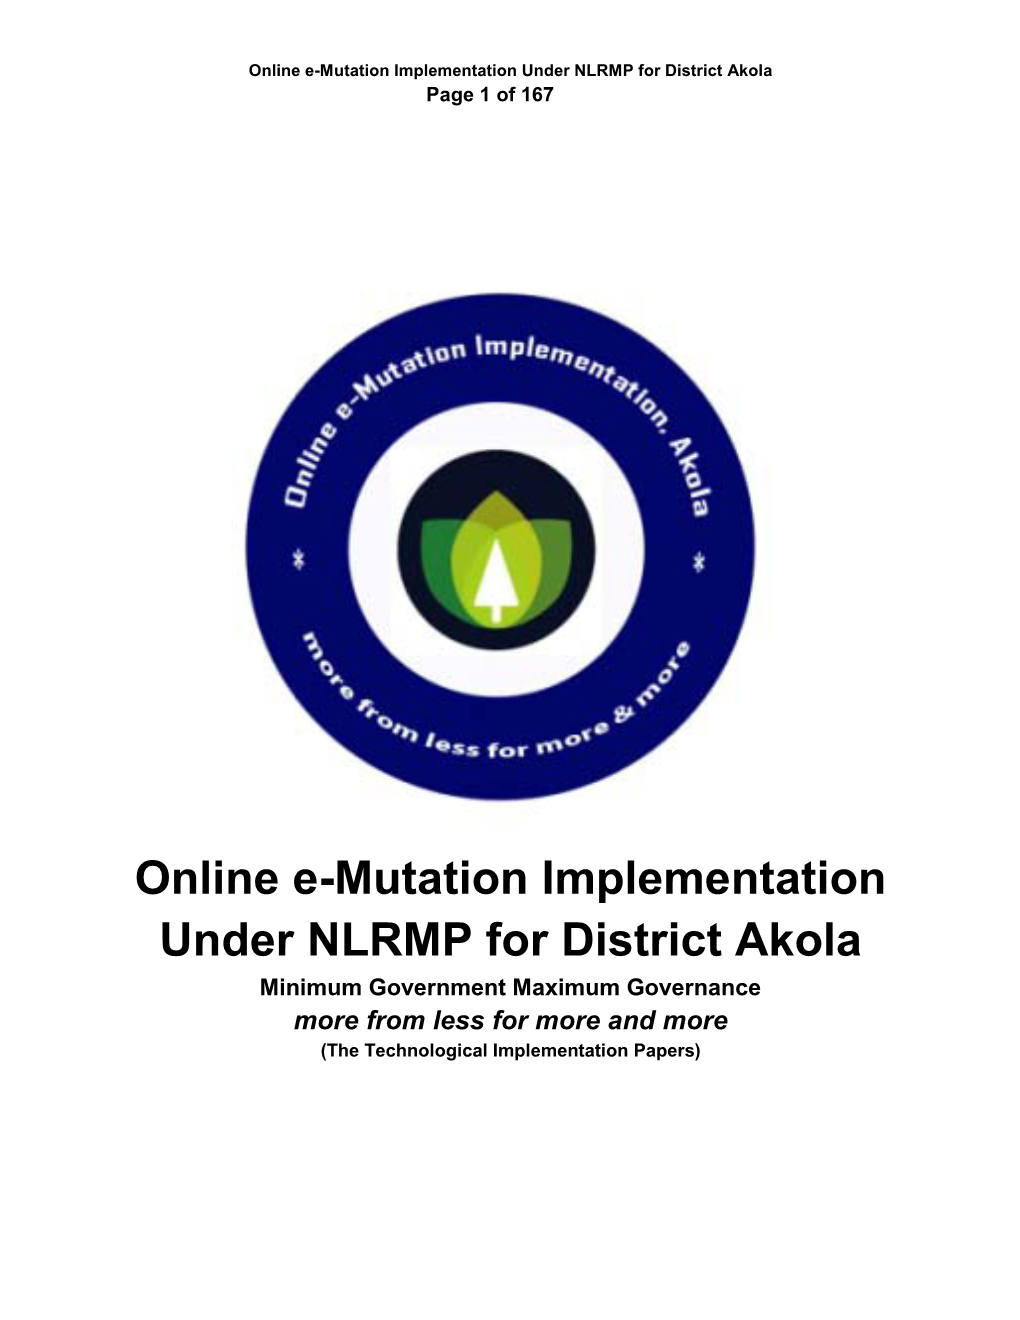 Online E-Mutation Implementation Under NLRMP for District Akola Page 1 of 167